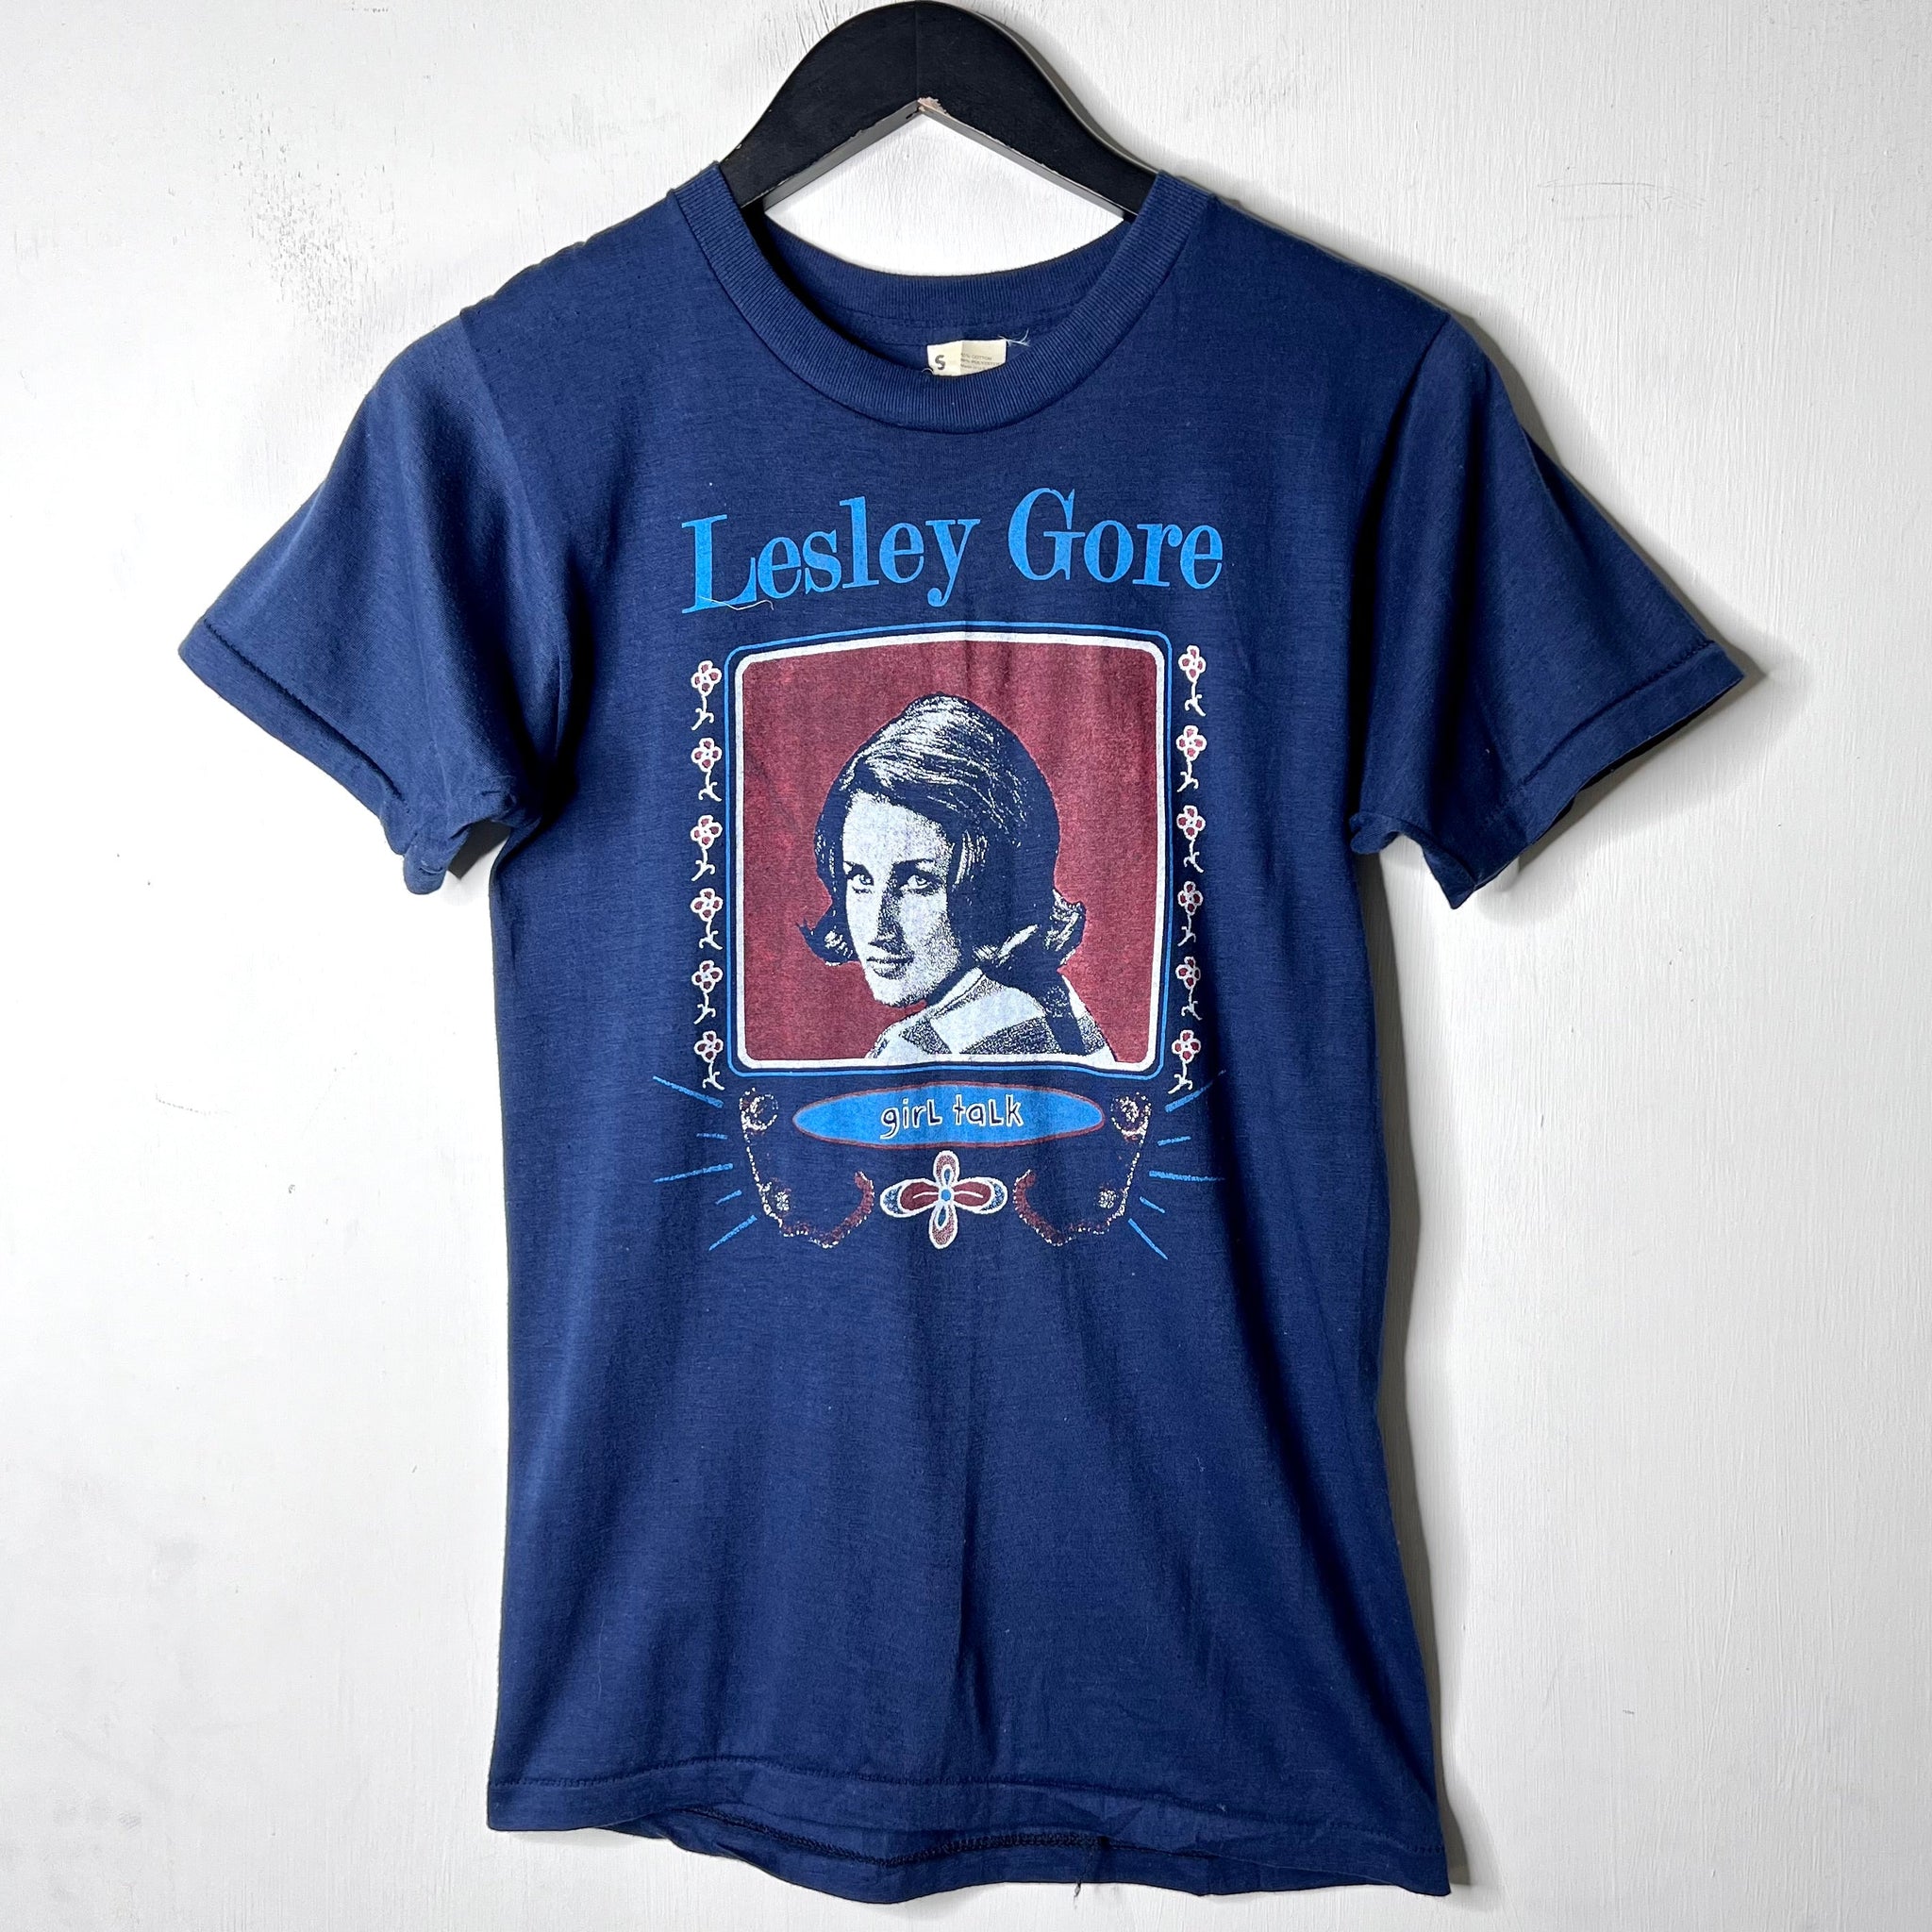 Lesley Gore 'Girl Talk' - 1980s